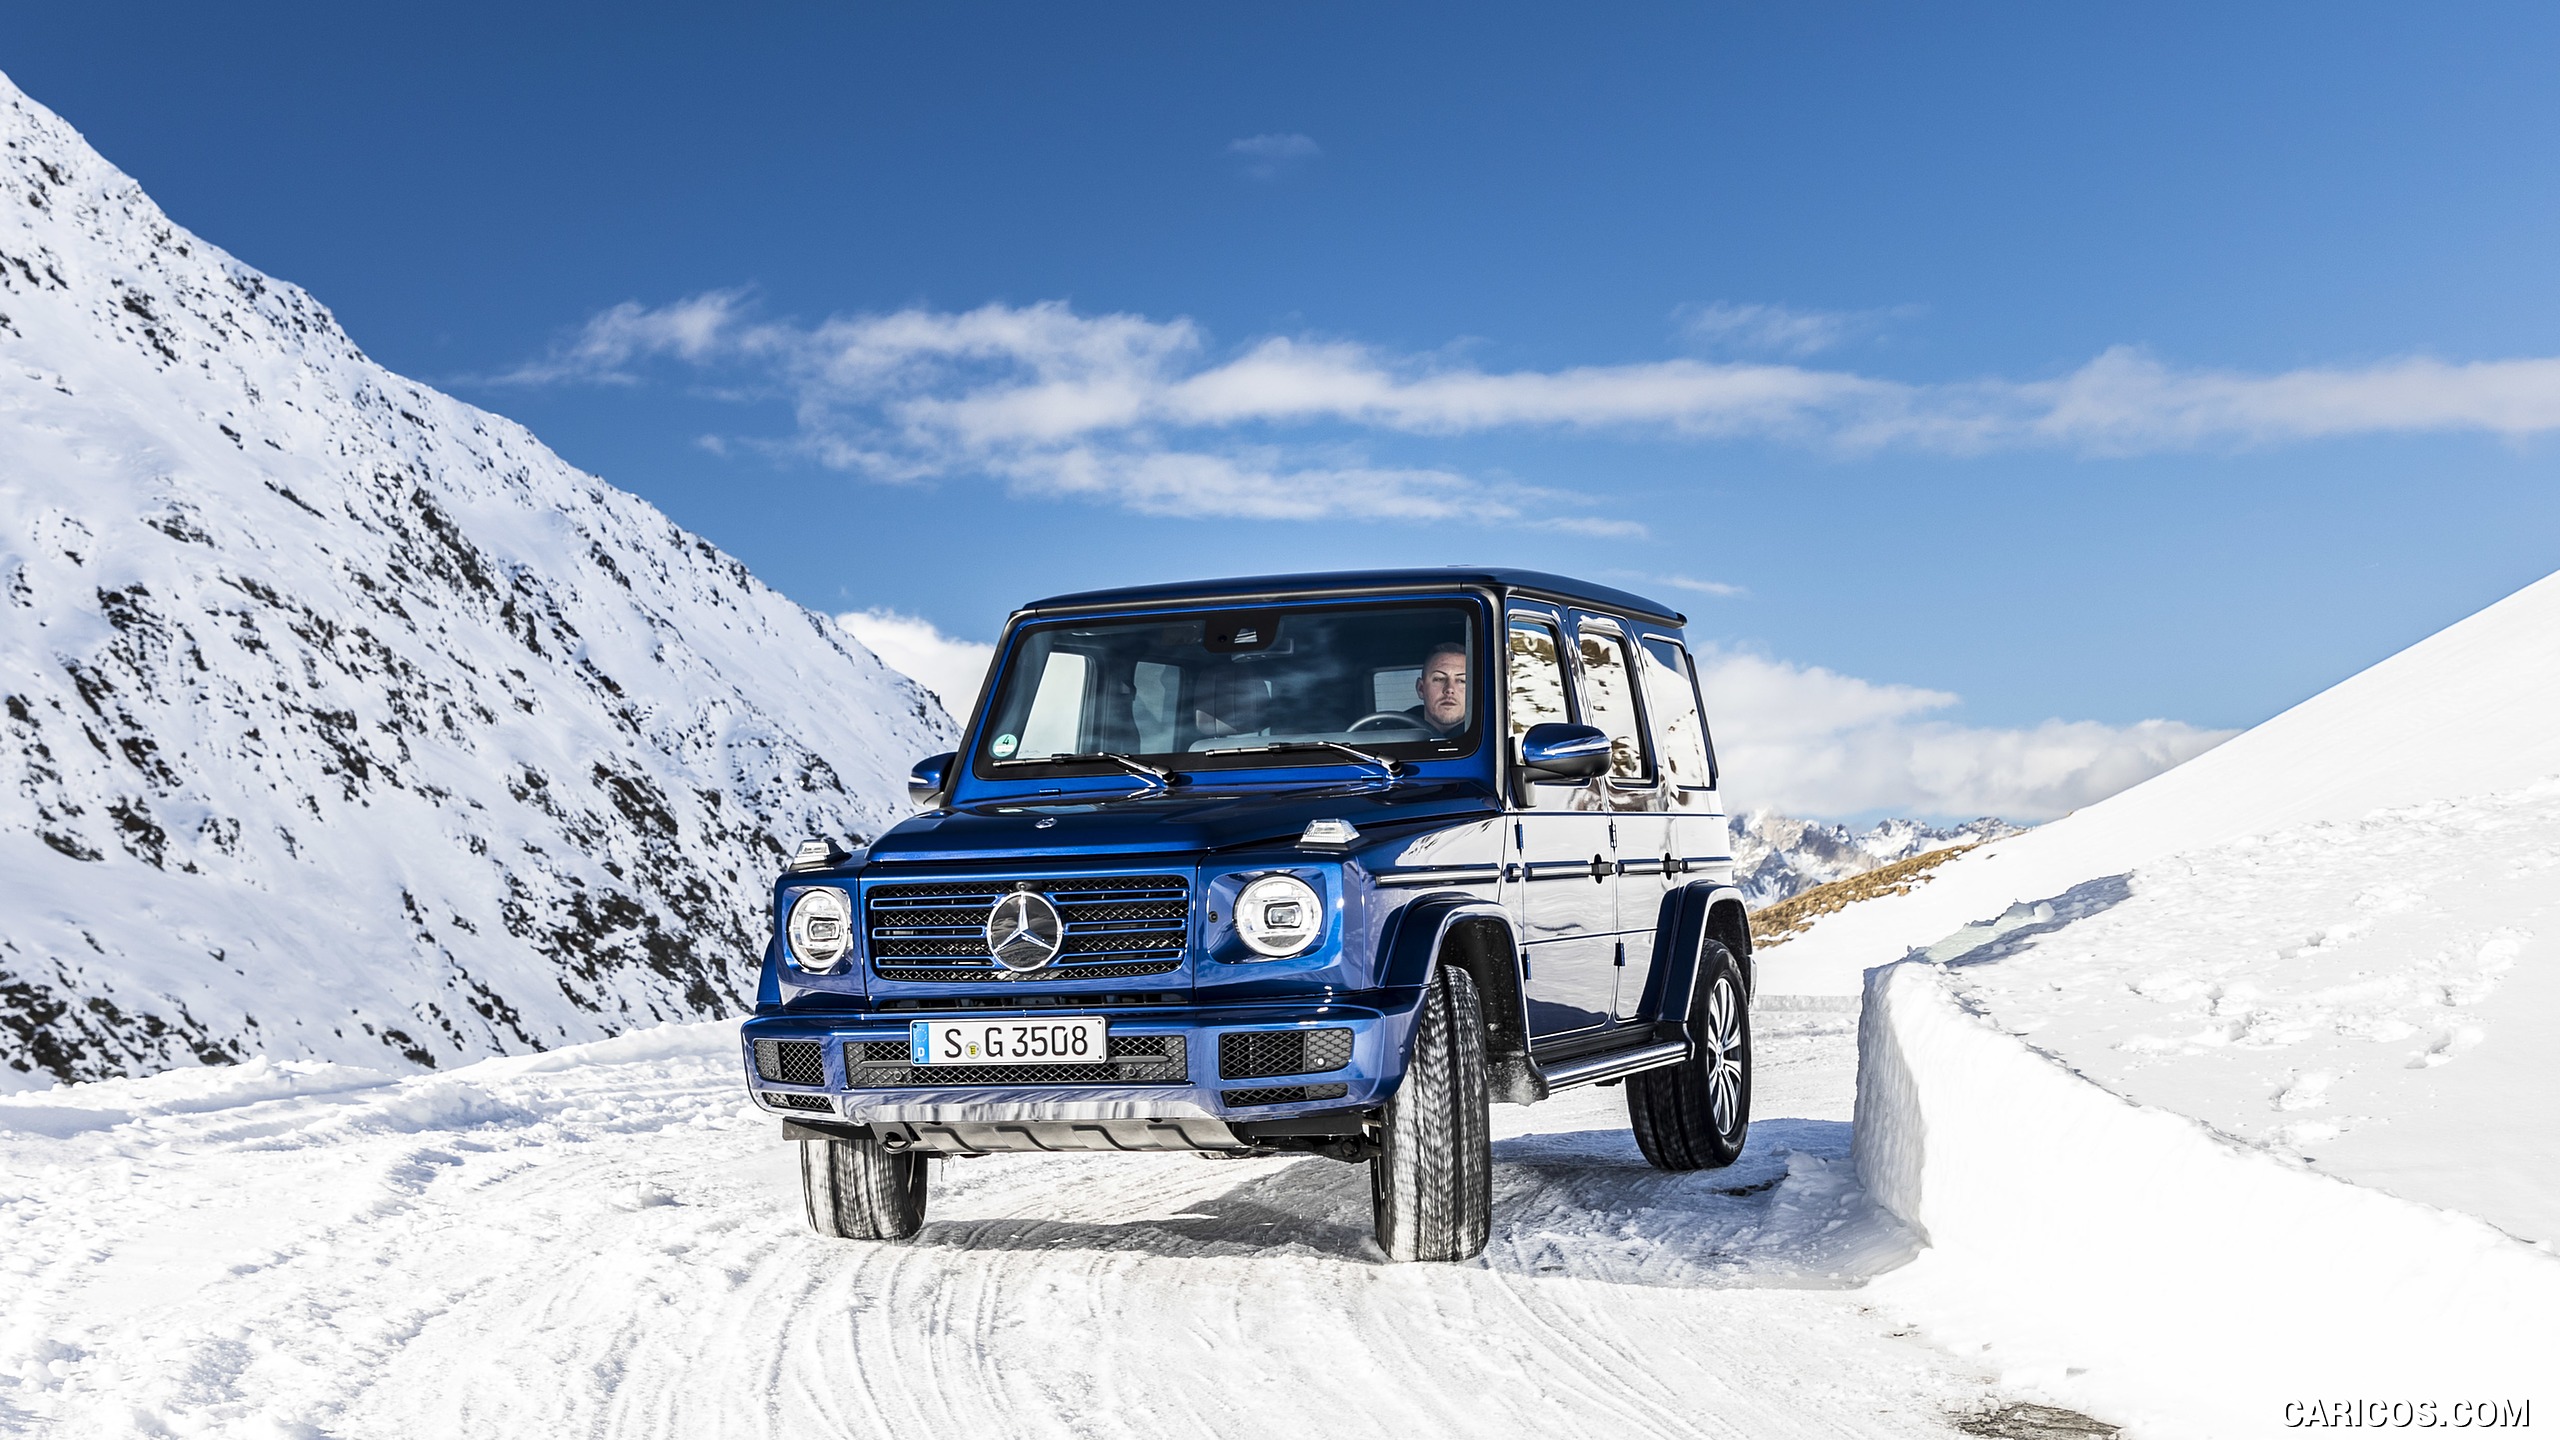 2019 Mercedes-Benz G 350 d (Brilliant Blue Metallic) - In Snow - Front, #25 of 51